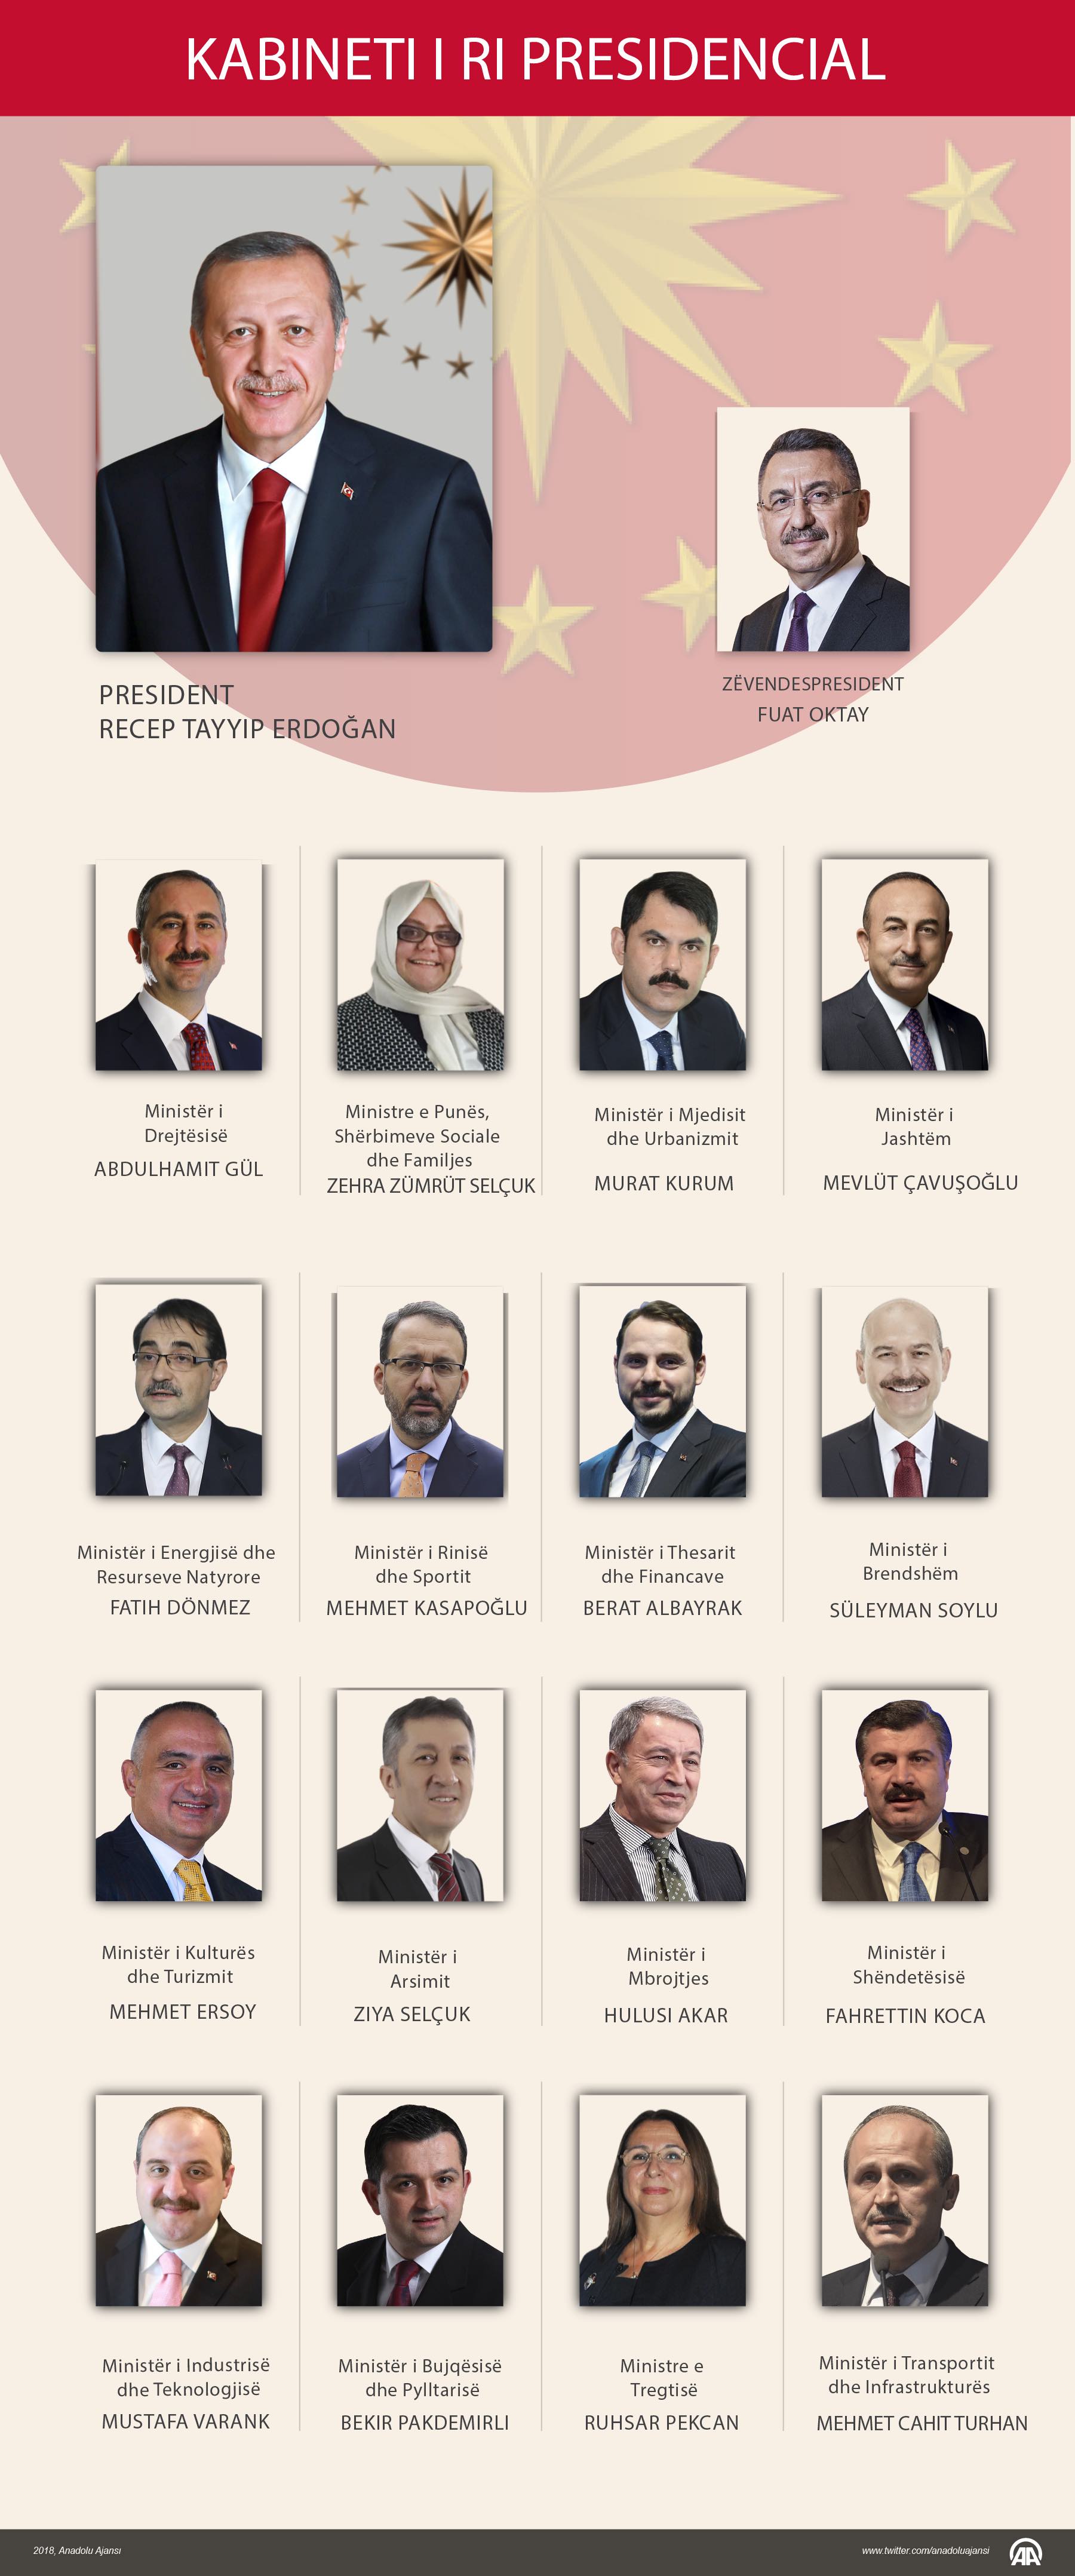 Erdoğan shpalos kabinetin e ri presidencial